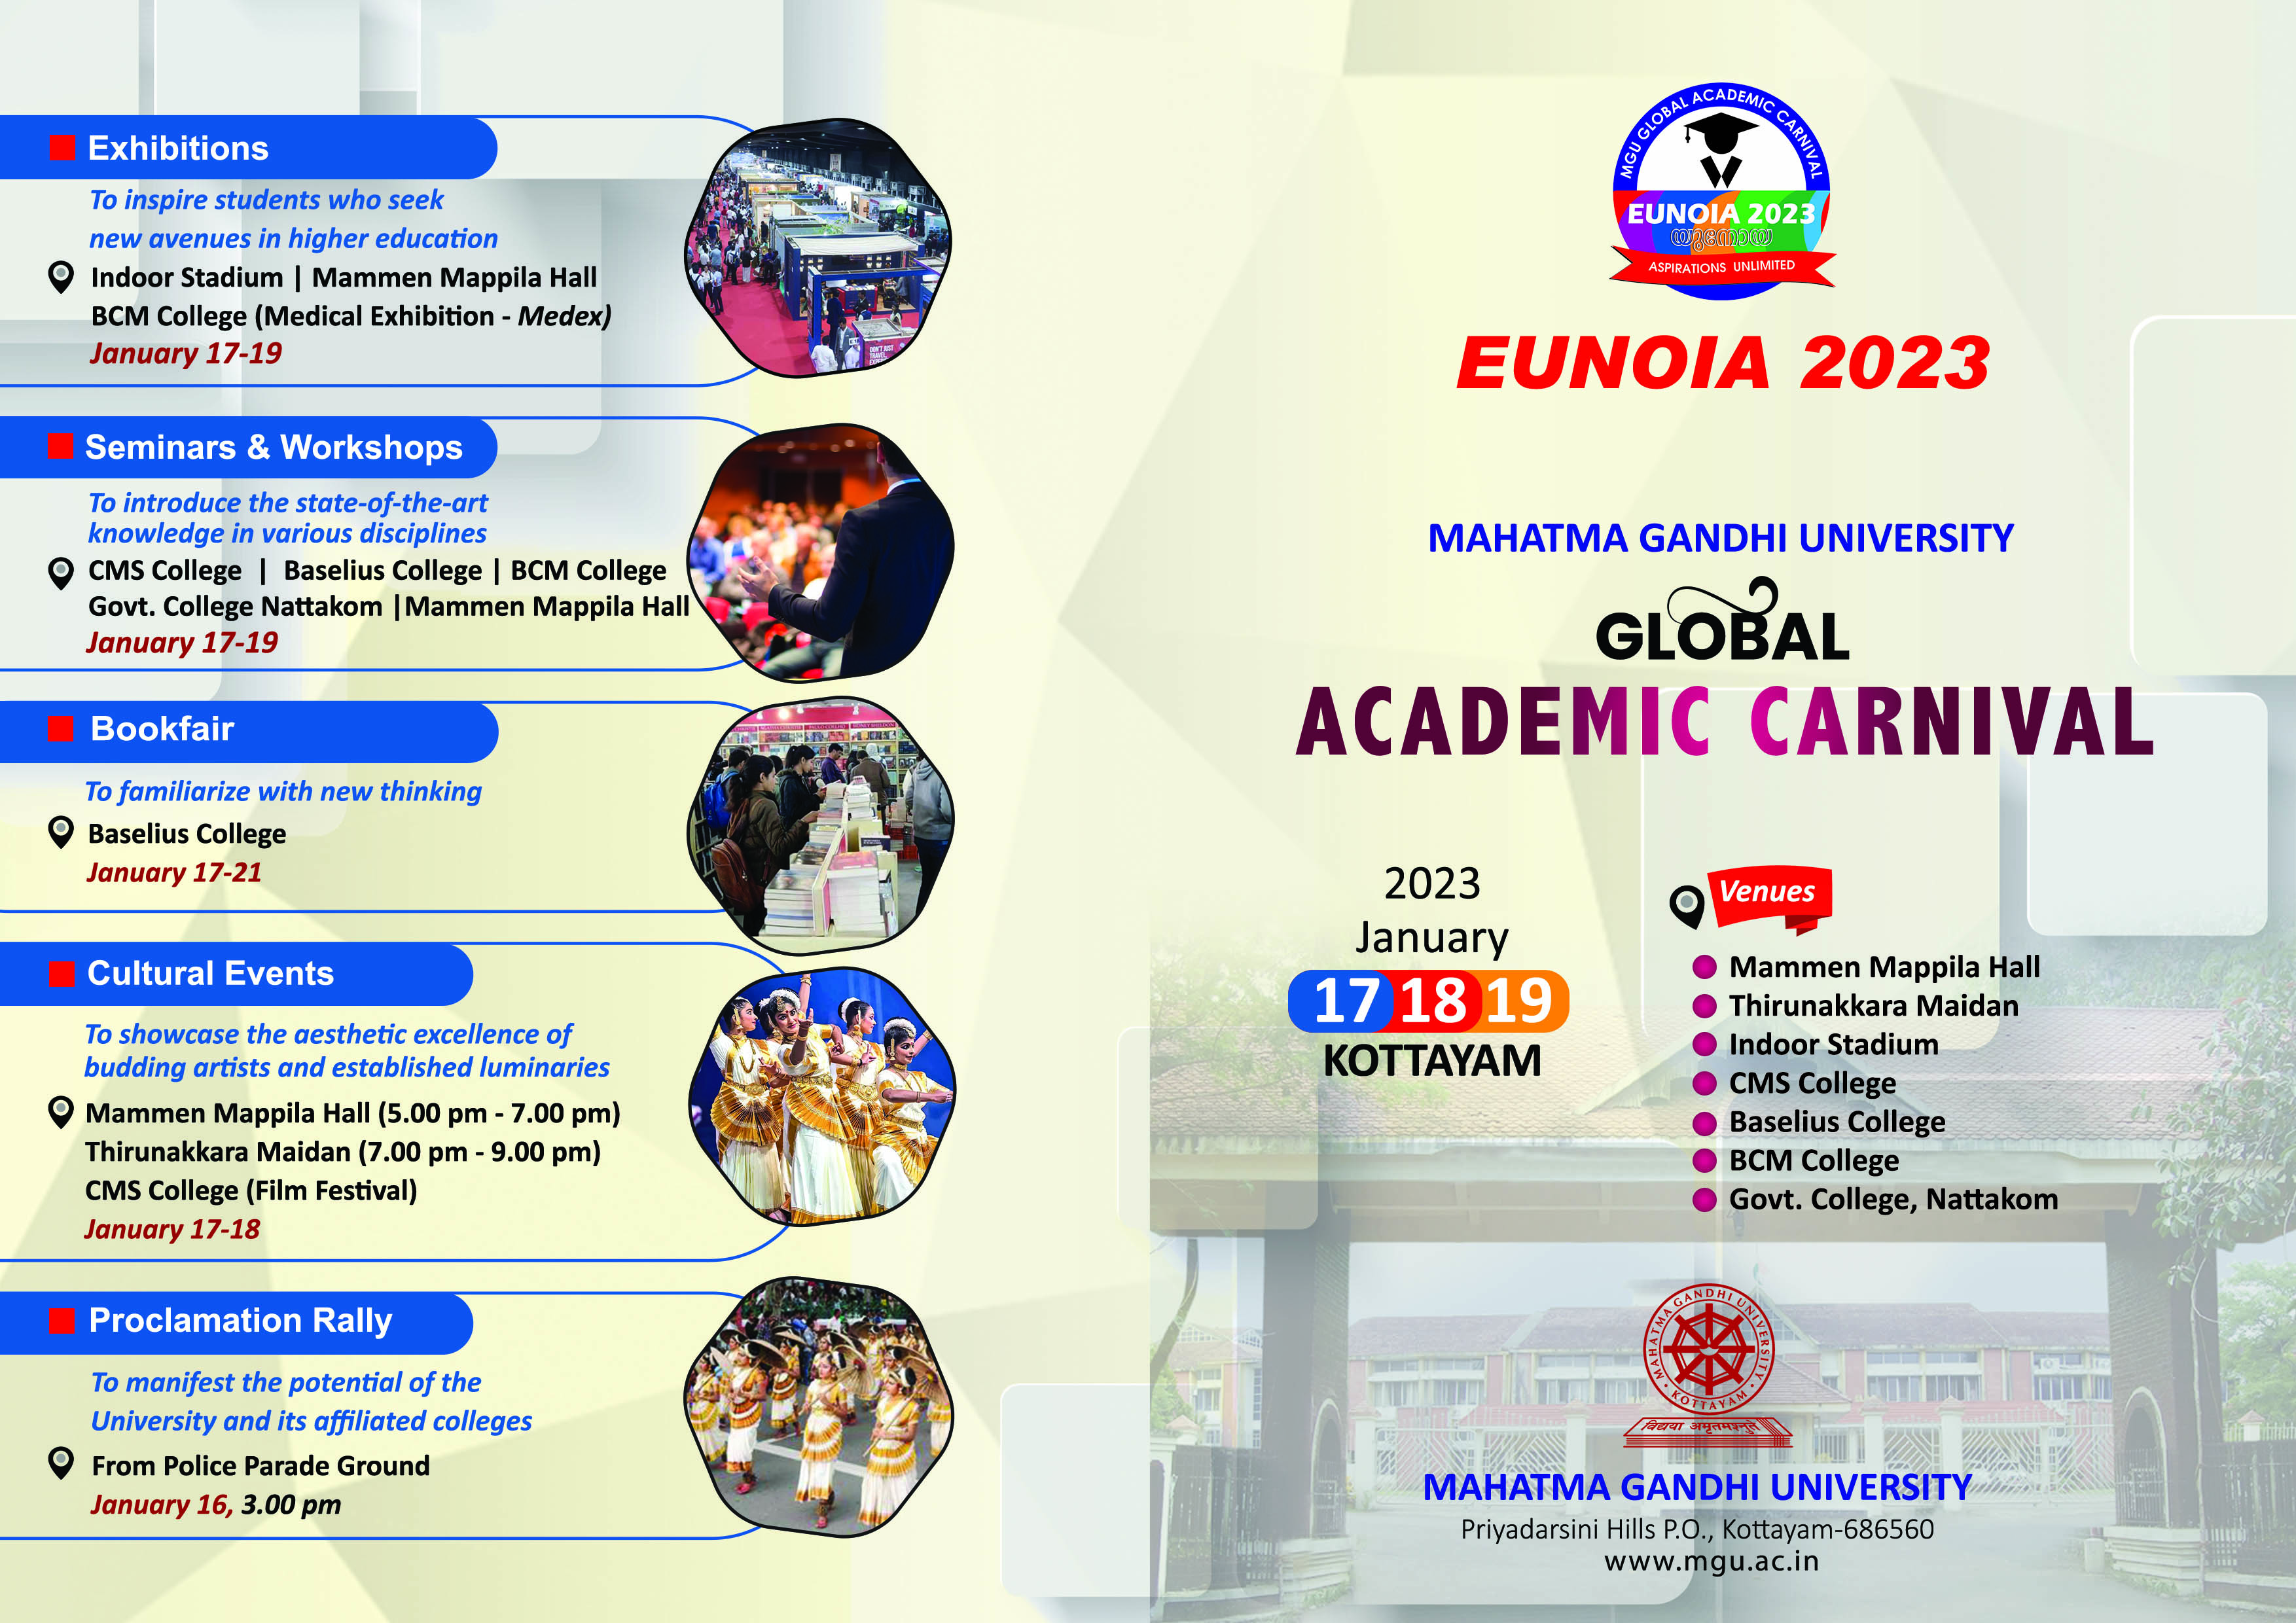 EUNOIA 2023 -- Global Academic Carnival organised by Mahatma Gandhi University at Kottayam